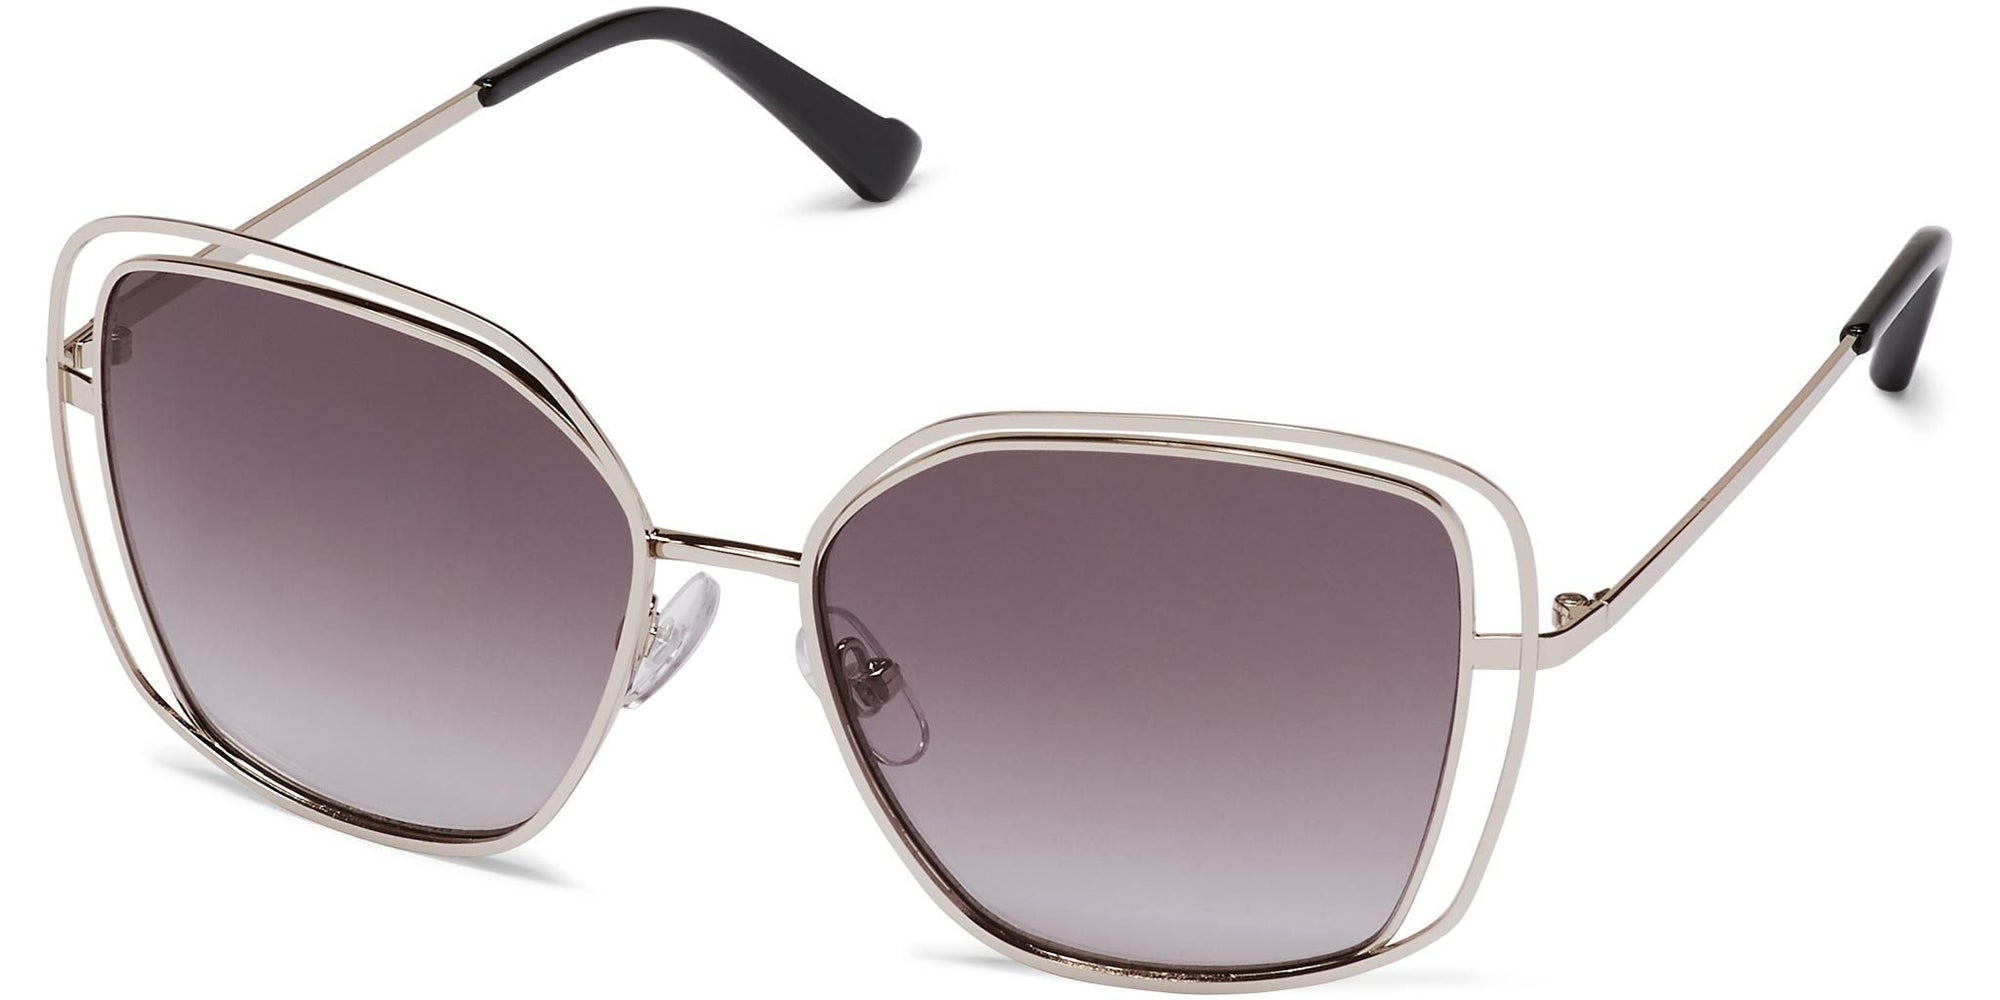 Castellon - Silver Metal/Gray Lens - Sunglasses